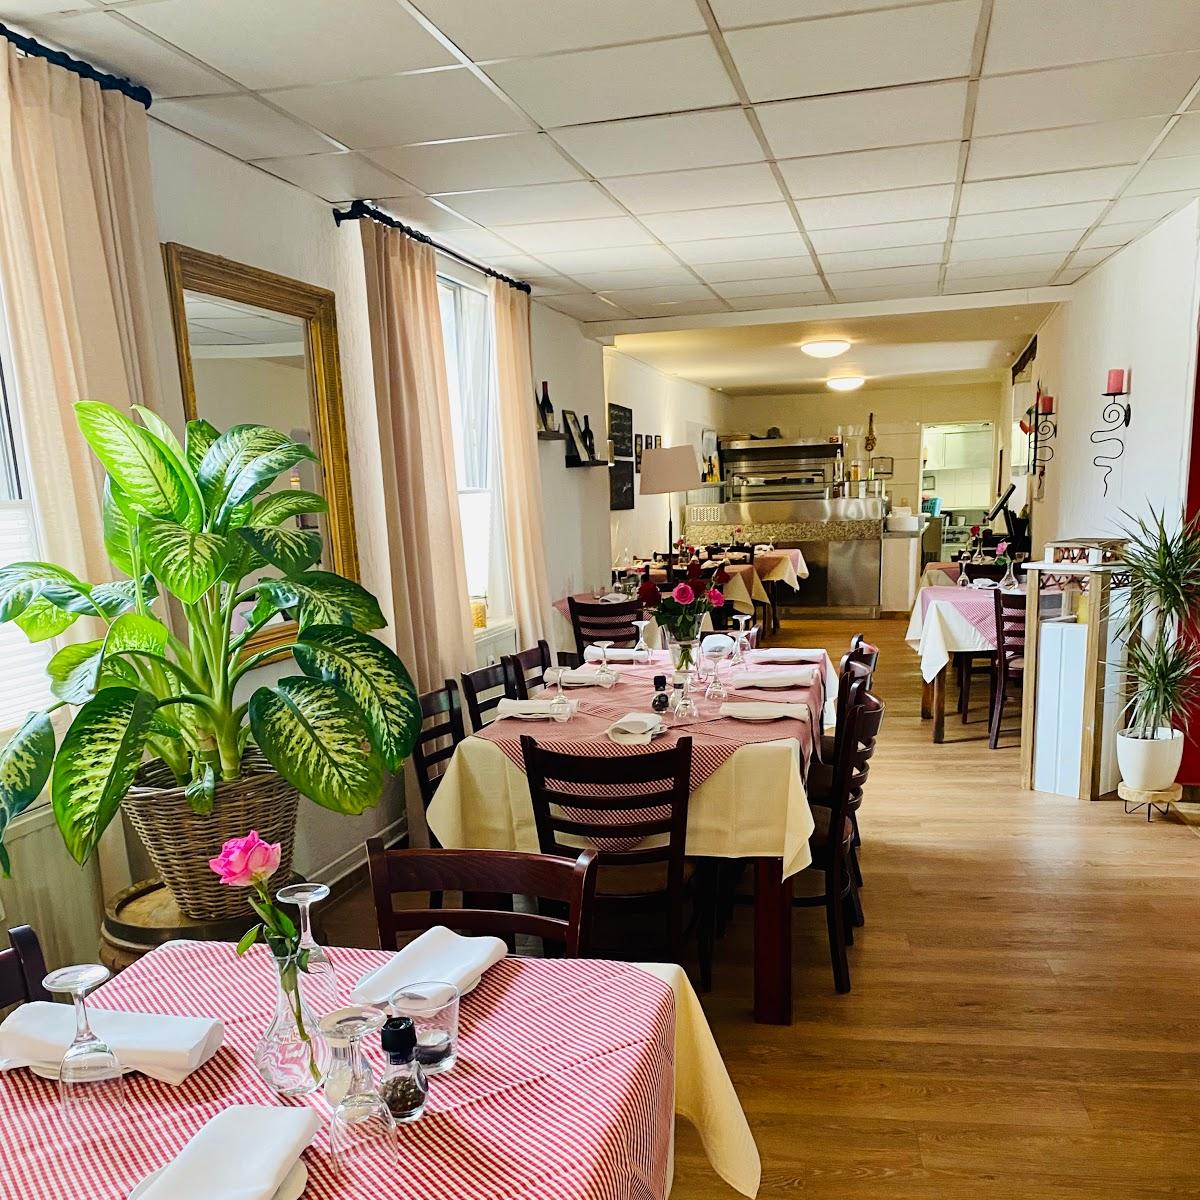 Restaurant "Trattoria da Sama" in Selfkant